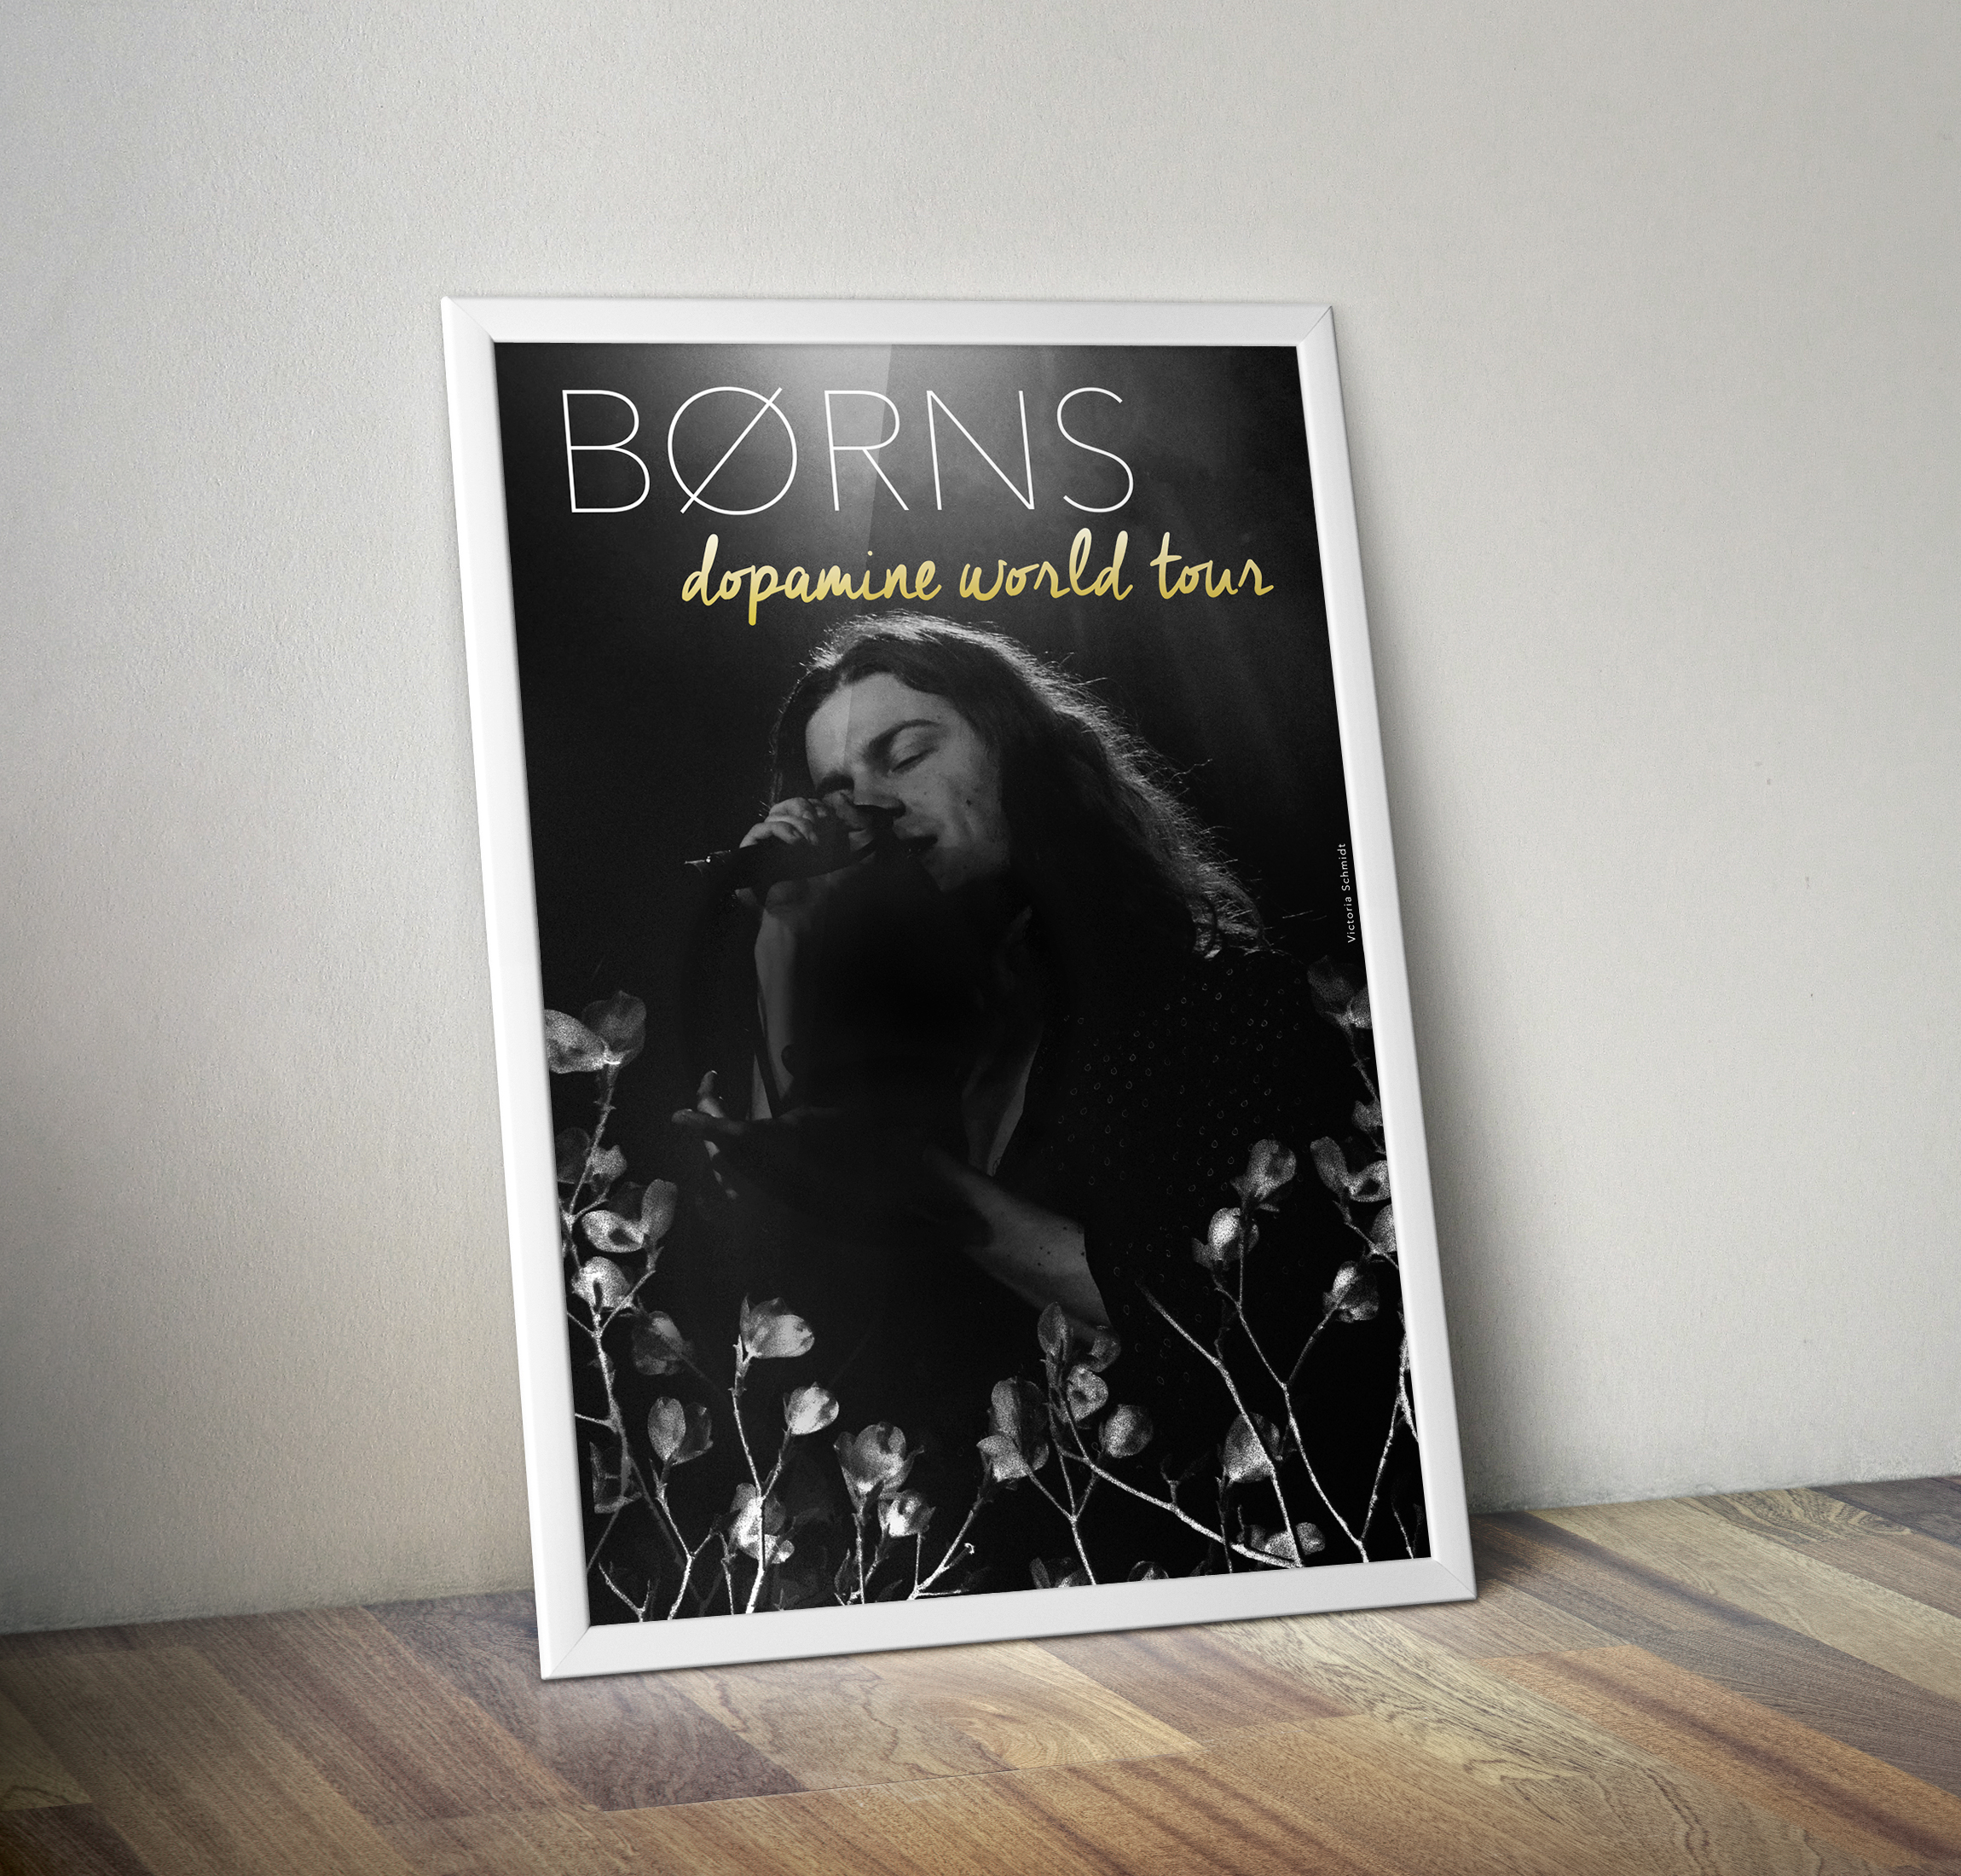 Borns tour poster